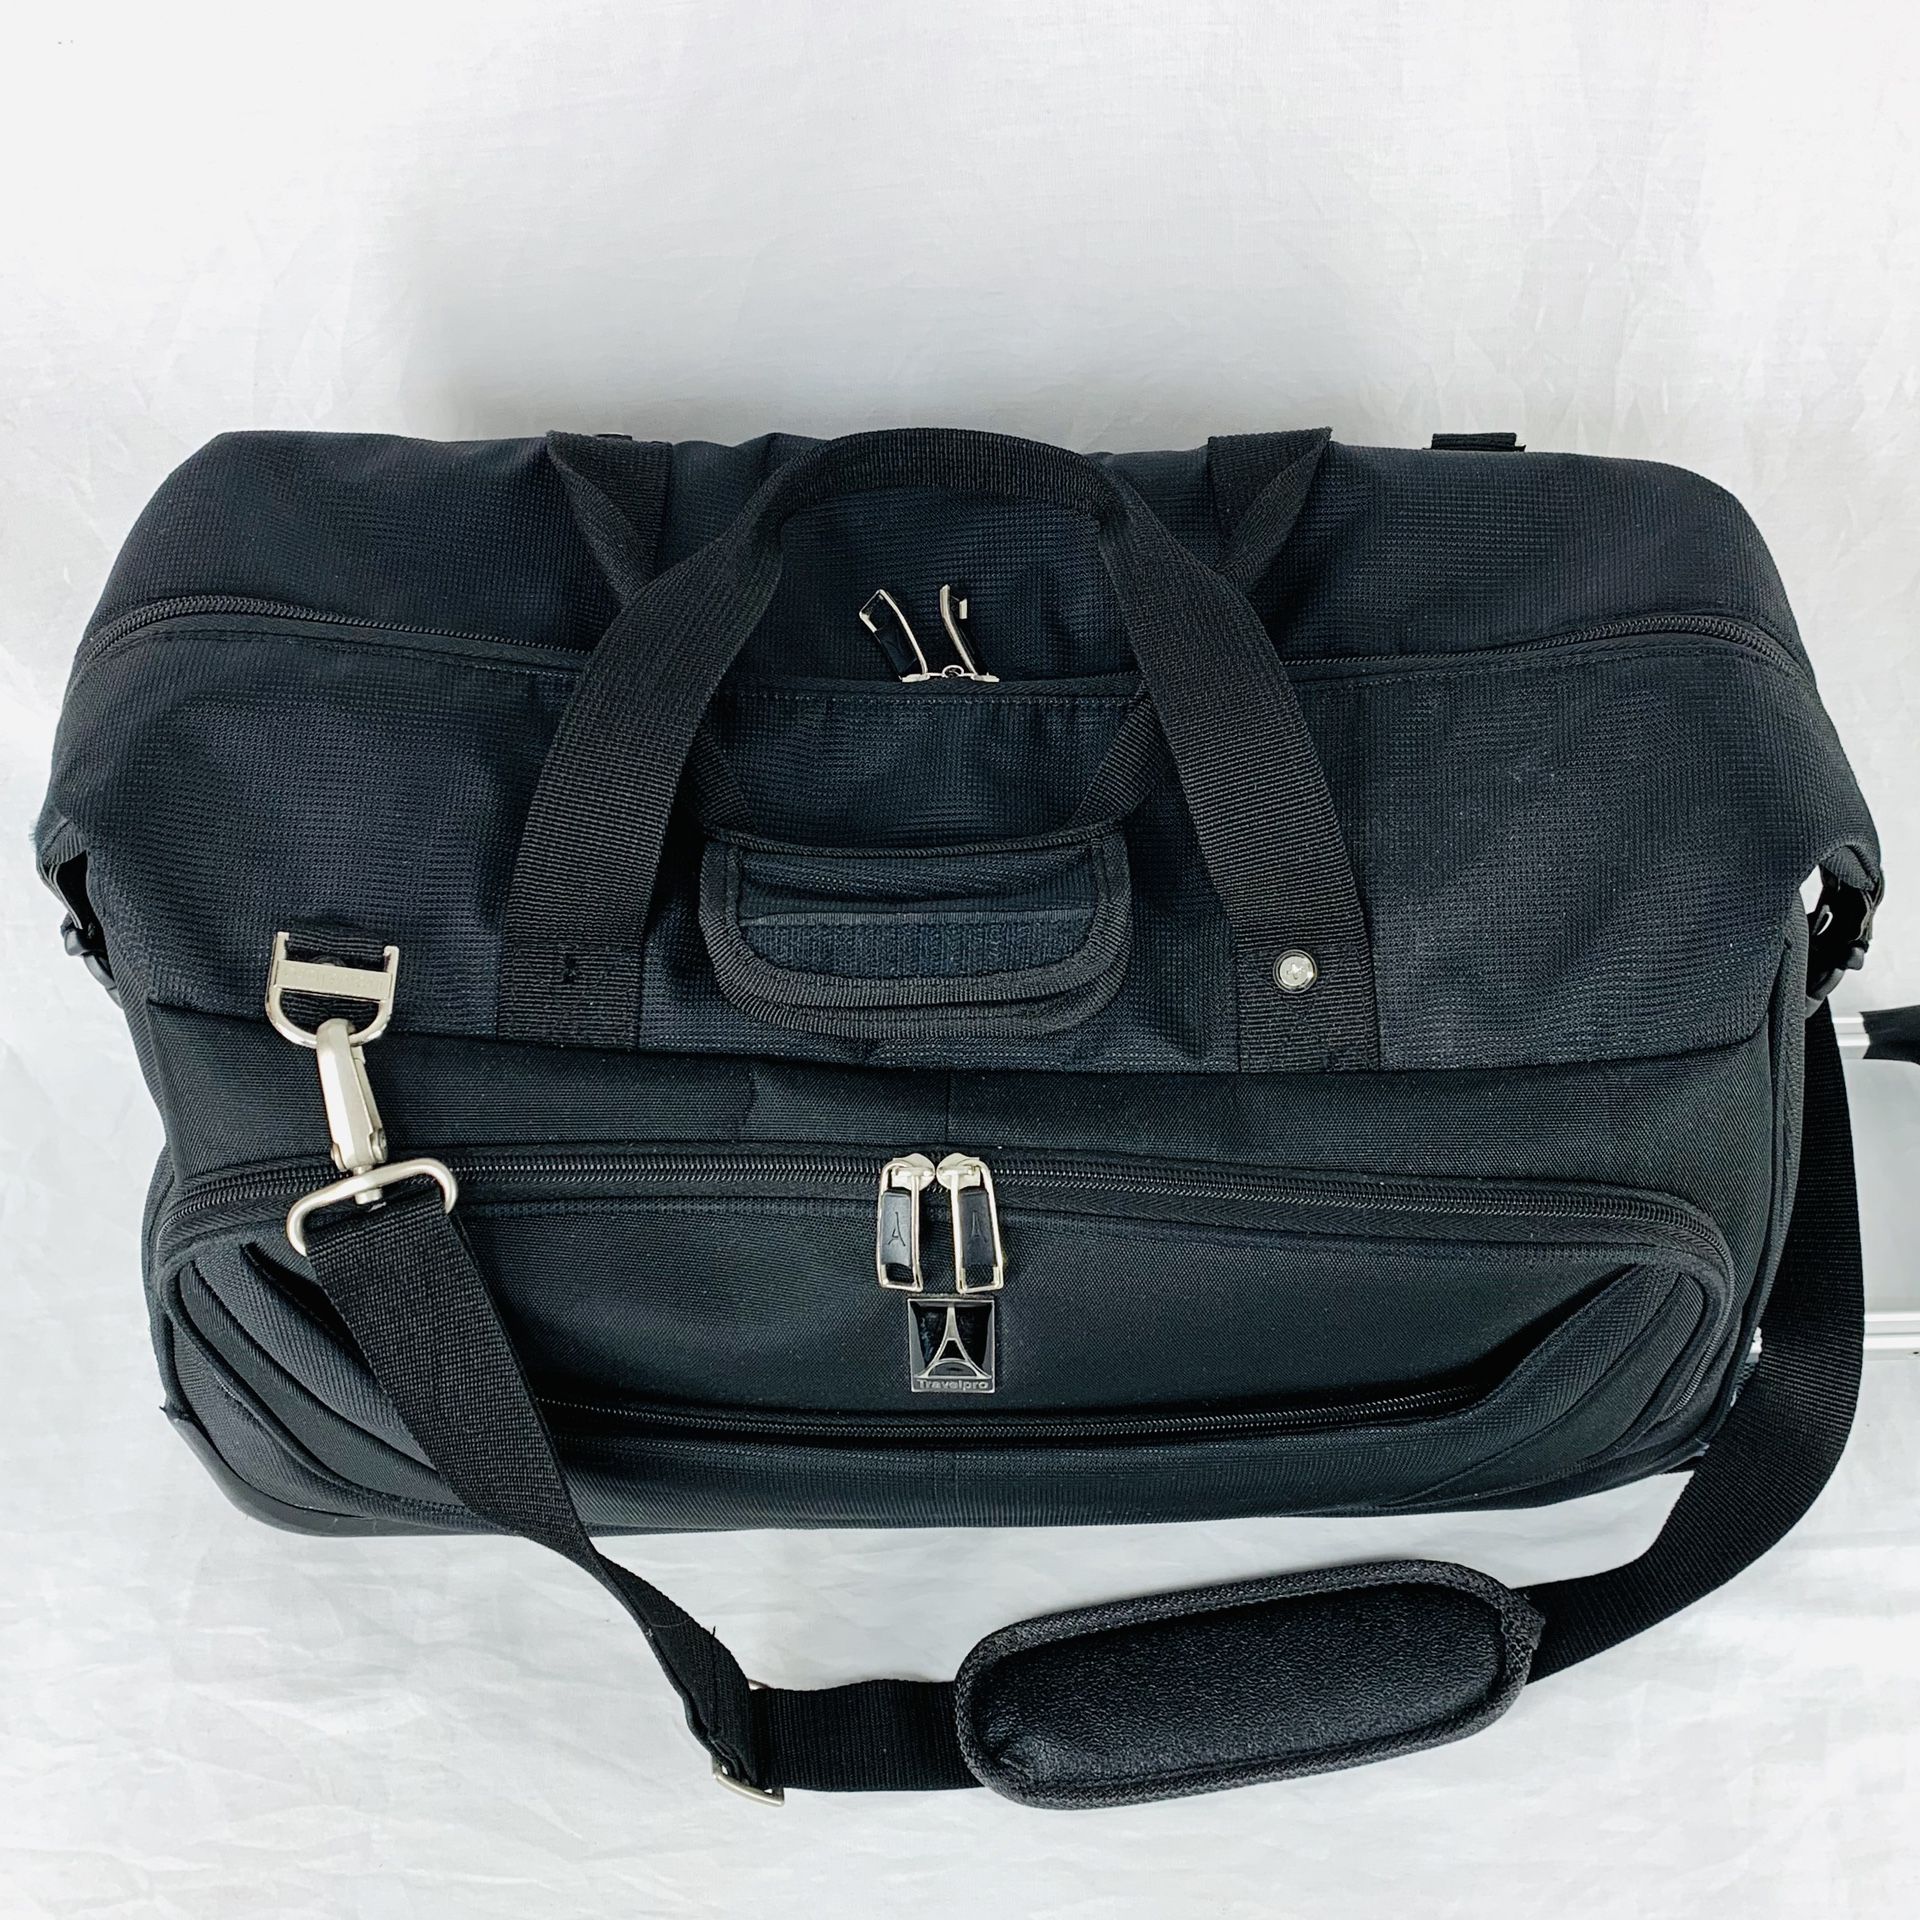 Travelpro Luggage Maxlite 5 20